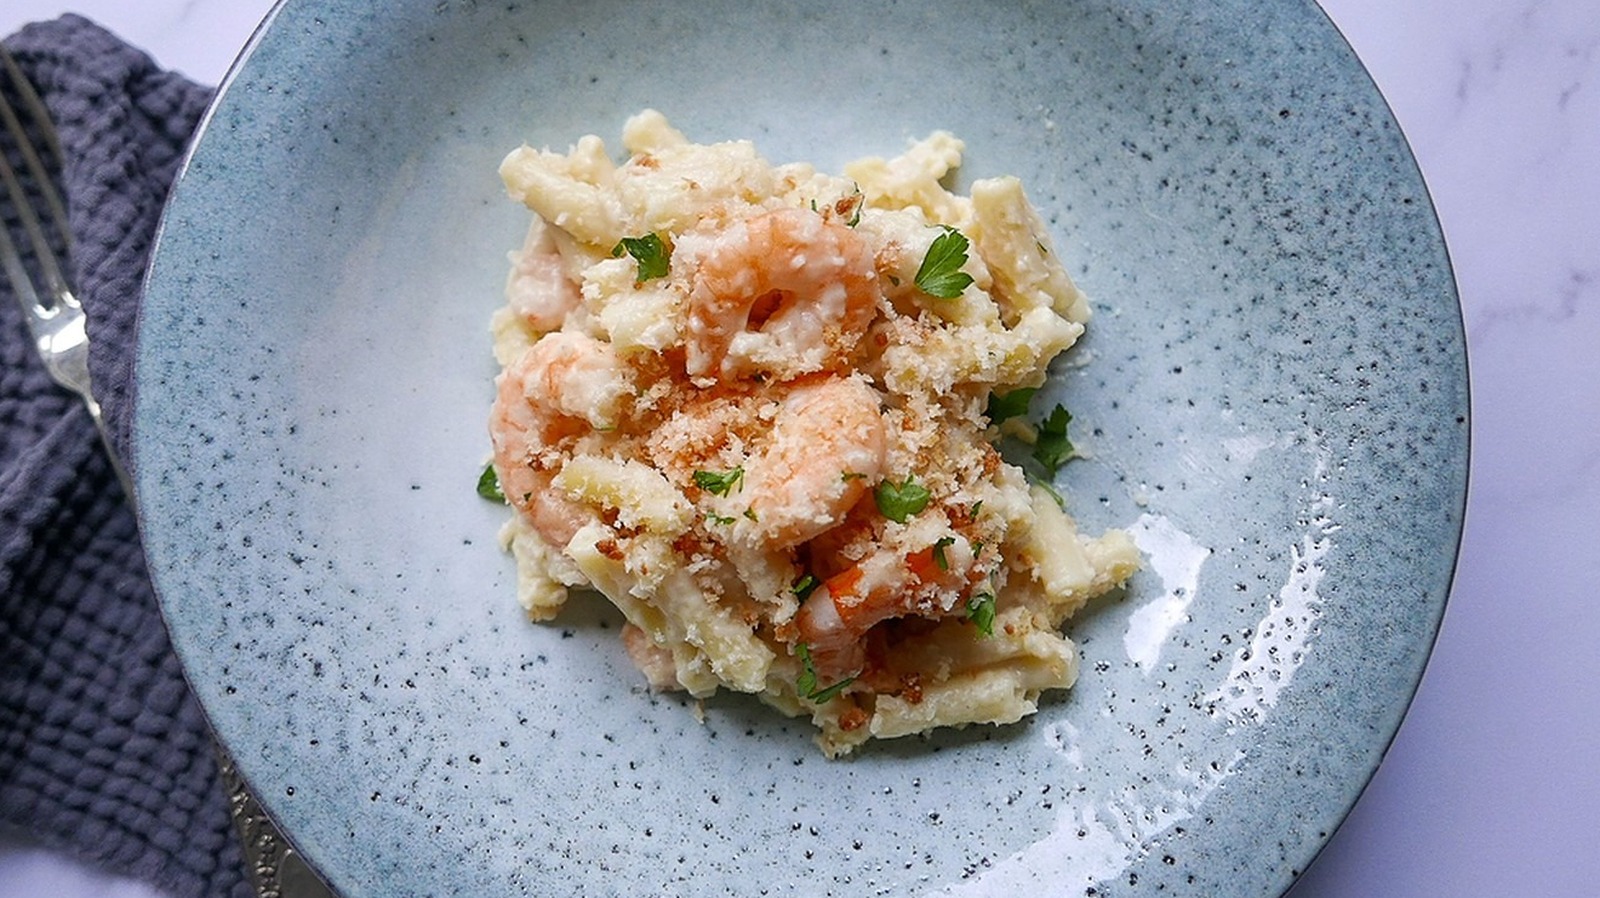 https://www.tastingtable.com/img/gallery/garlic-shrimp-mac-and-cheese-recipe/l-intro-1640202470.jpg